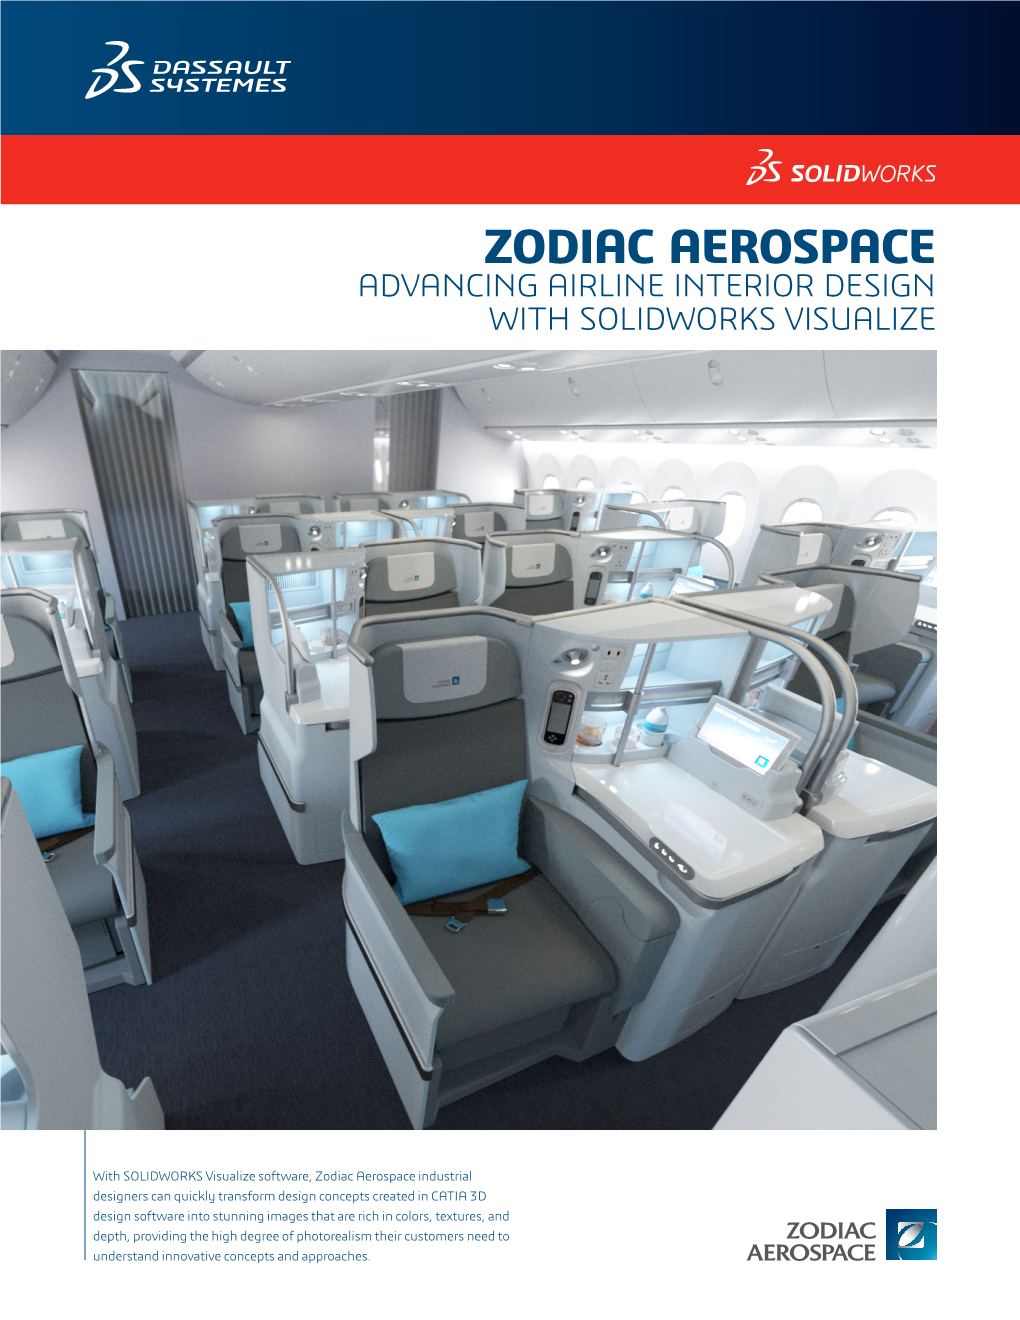 Zodiac Aerospace Advancing Airline Interior Design with Solidworks Visualize